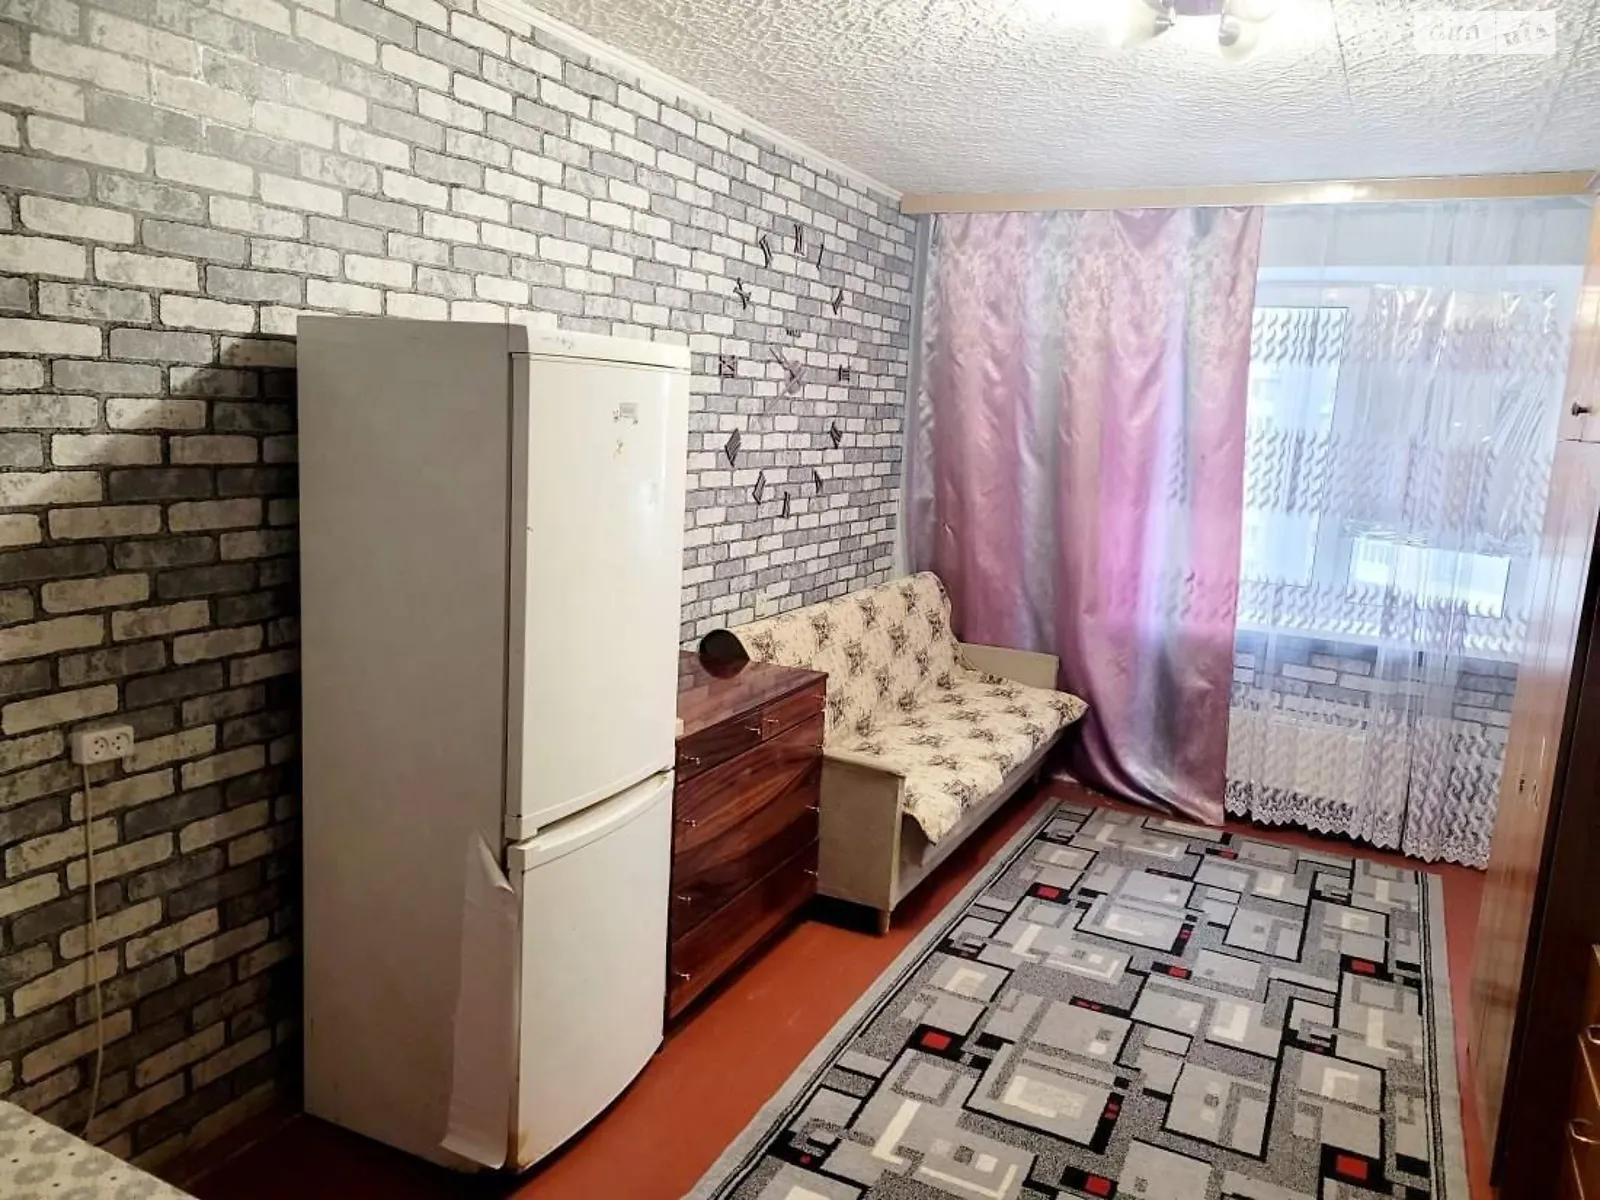 Продается комната 80 кв. м в Киеве, цена: 16500 $ - фото 1